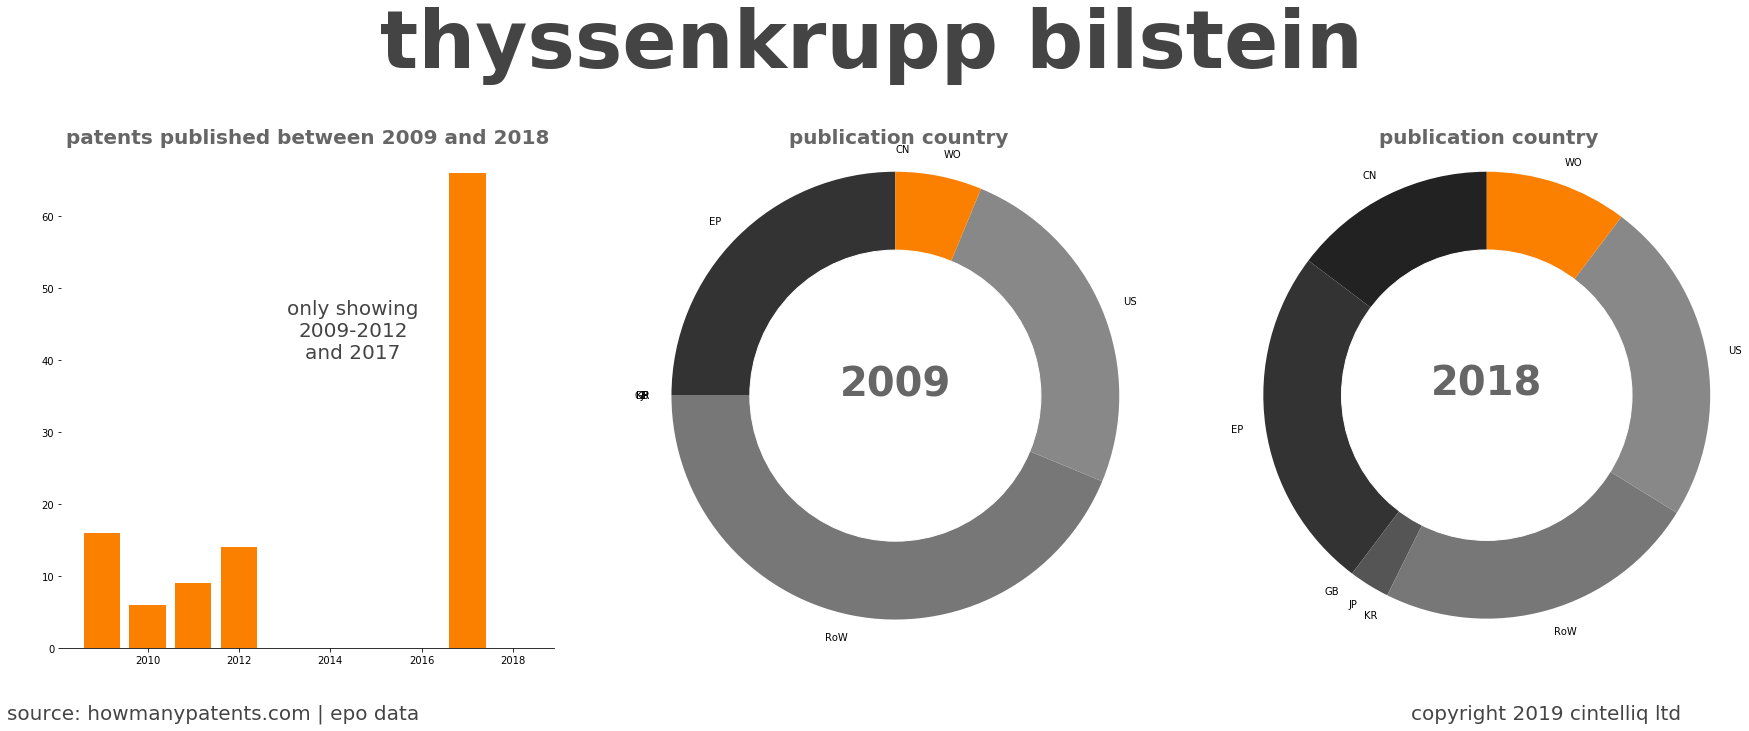 summary of patents for Thyssenkrupp Bilstein